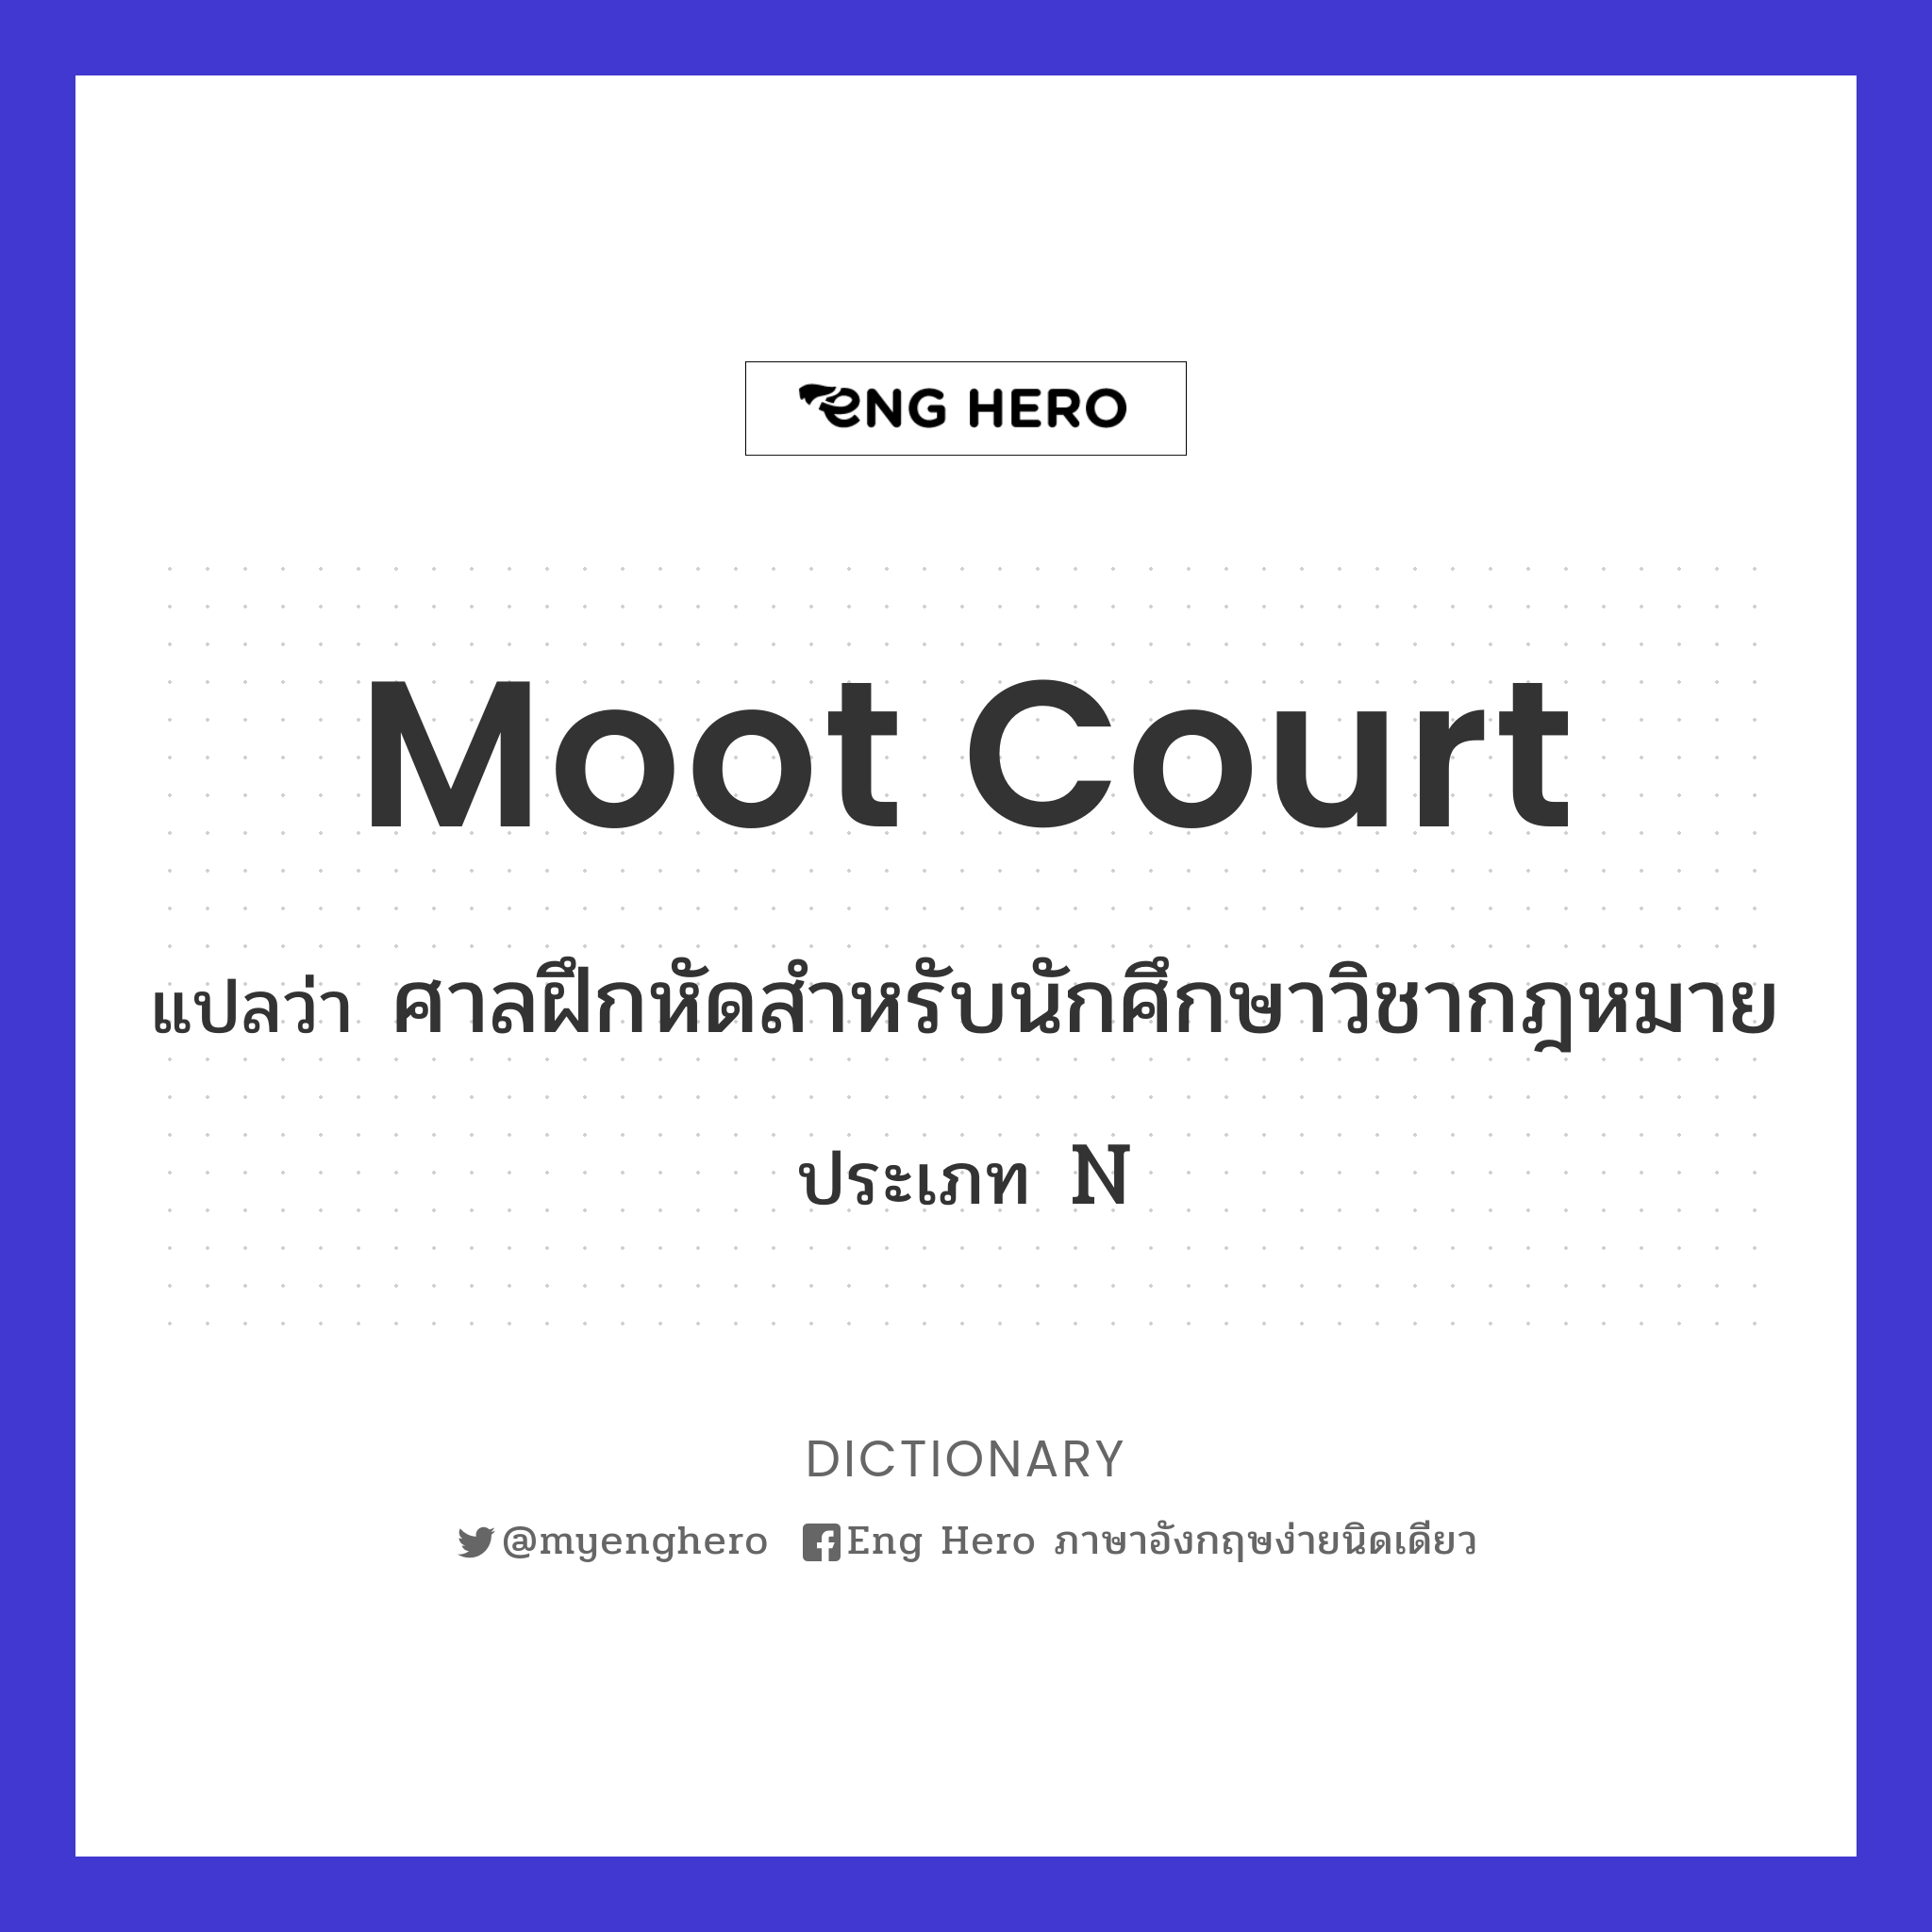 moot court